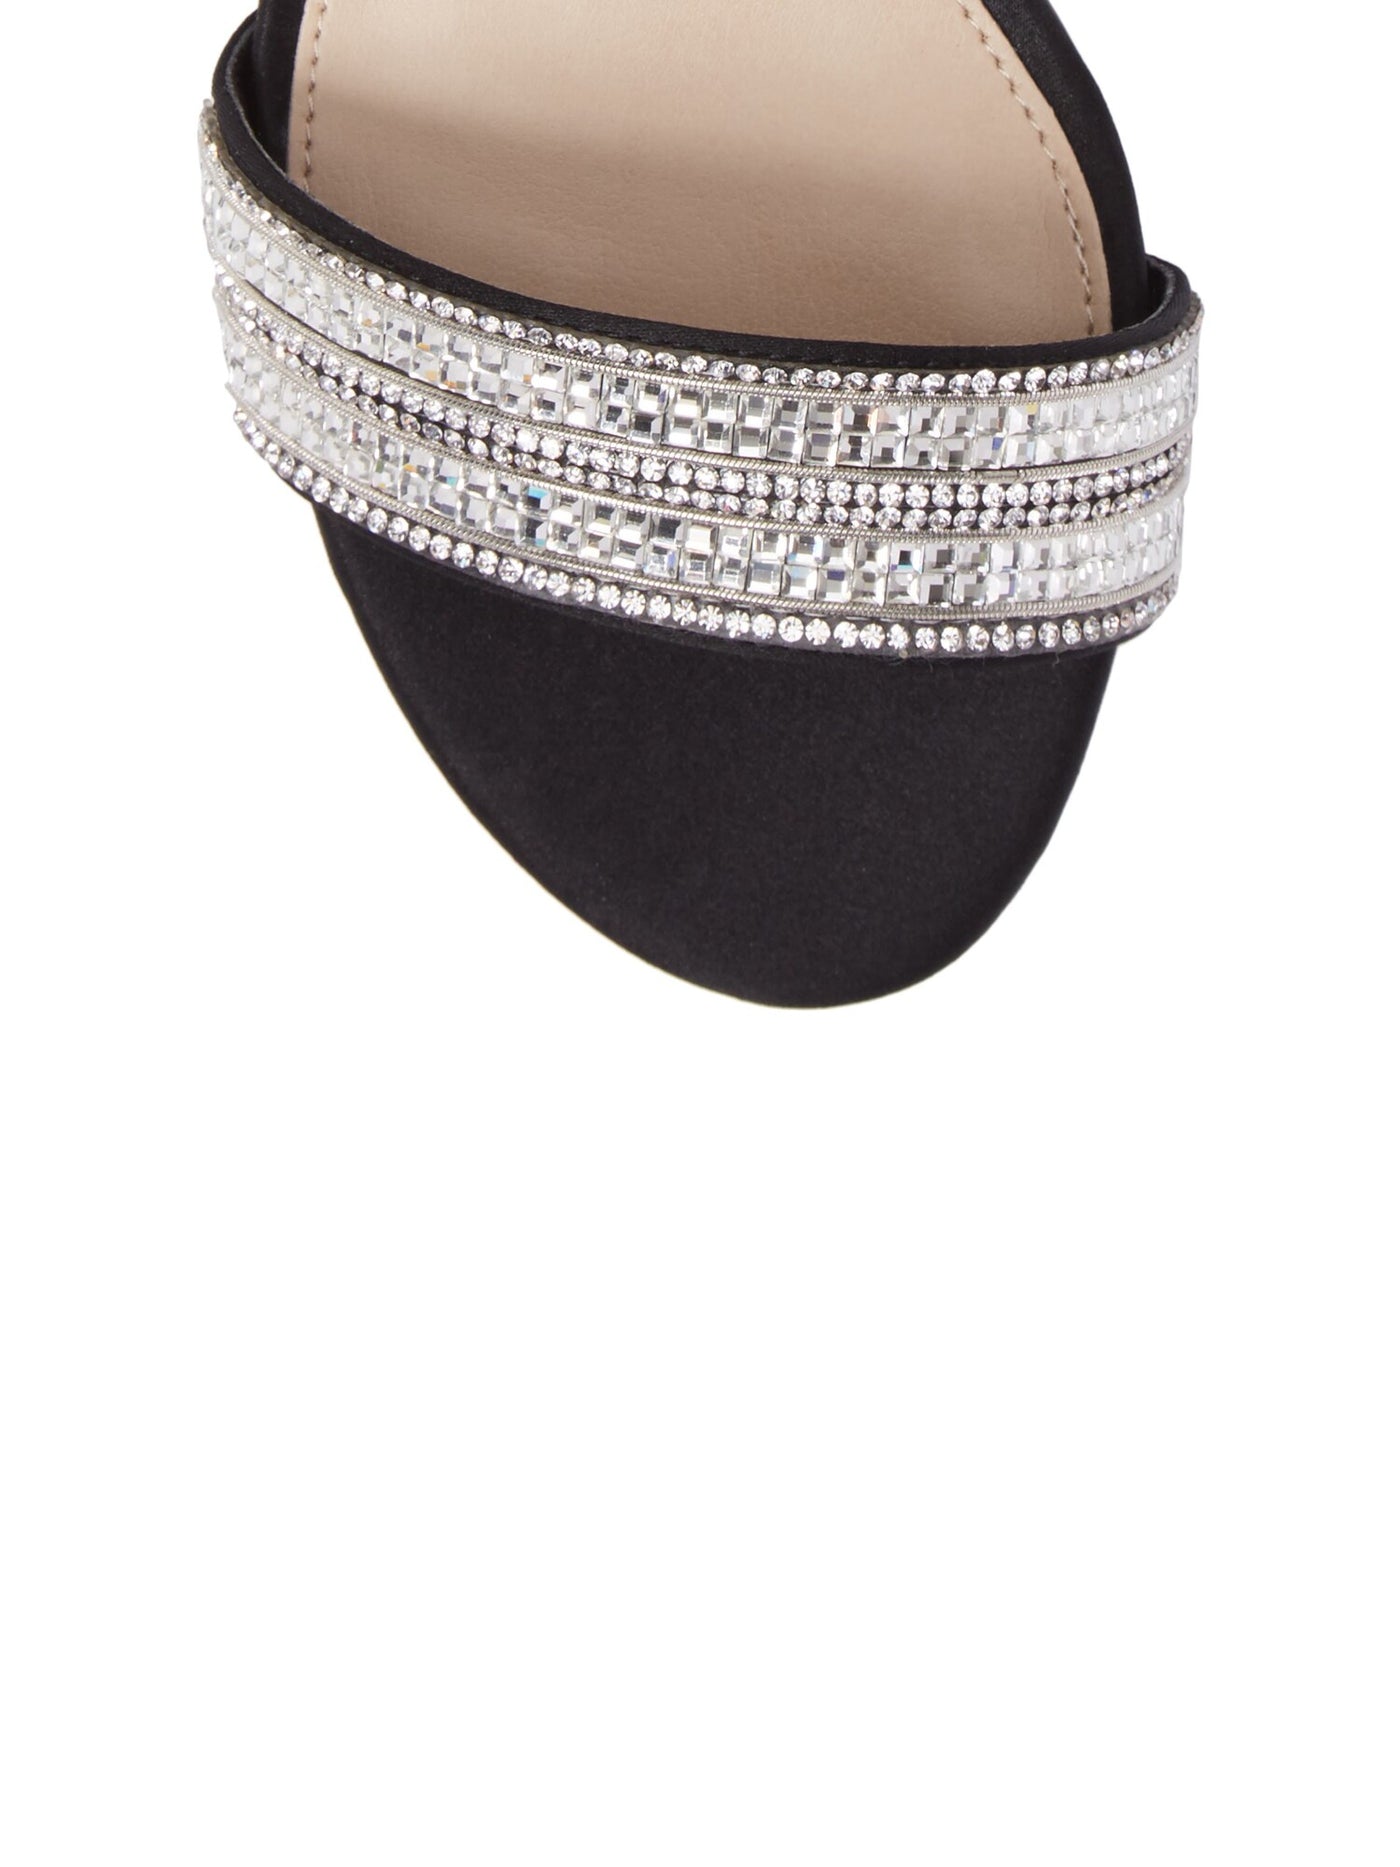 NINA Womens Black Crystal Embellishment Ankle Strap Elenora Round Toe Block Heel Buckle Leather Dress Sandals Shoes 5.5 M